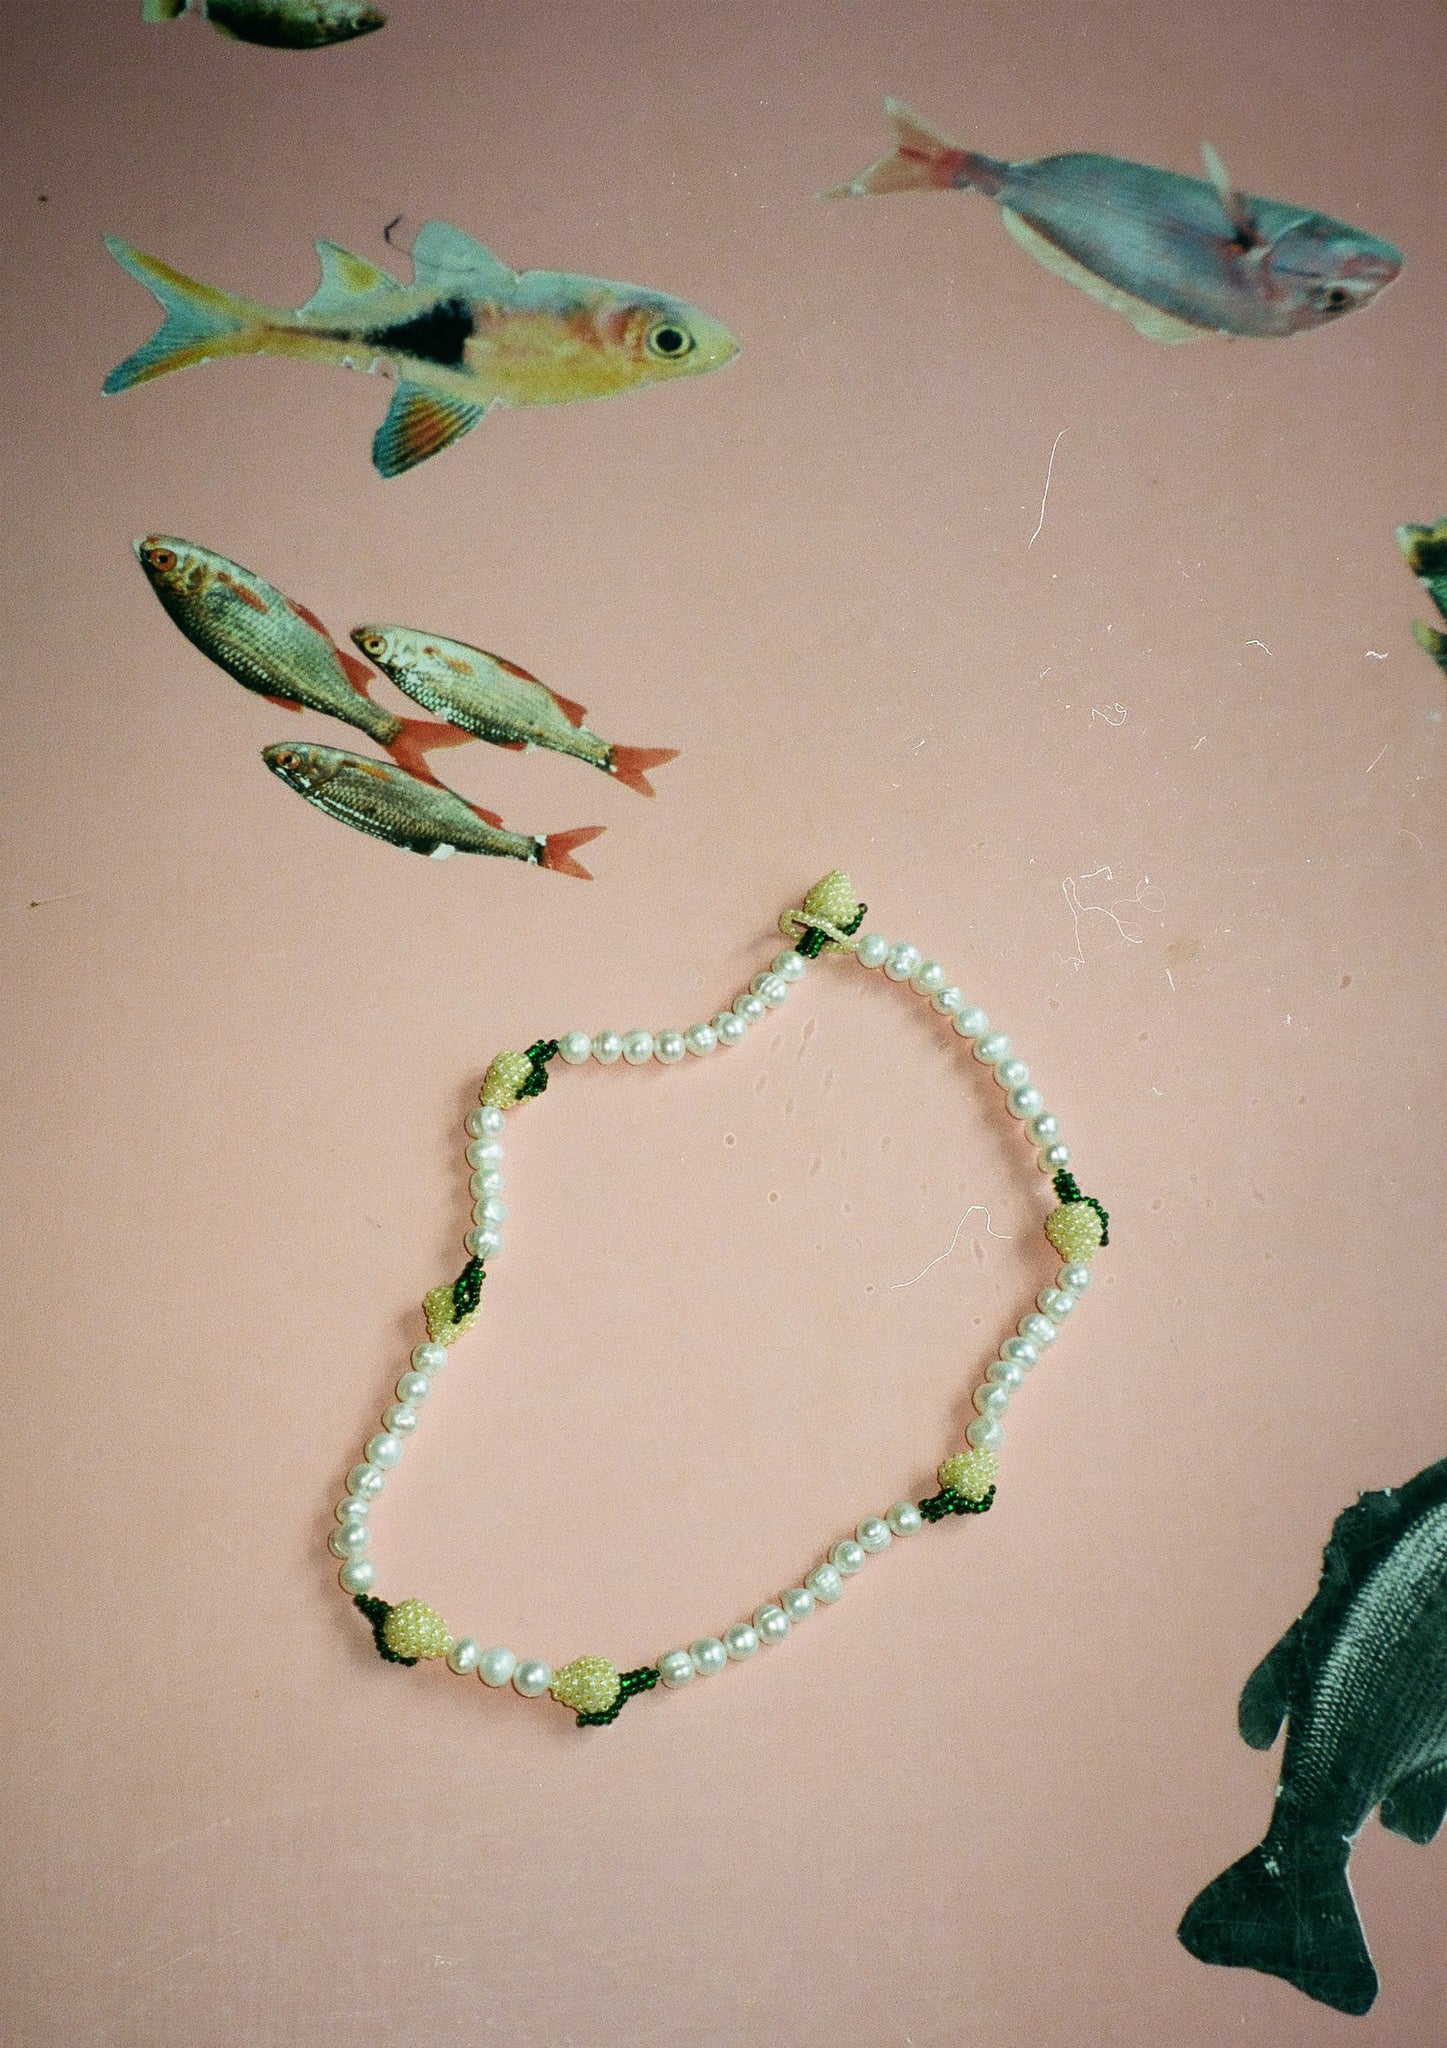 Multi Pearl Lemon Necklace